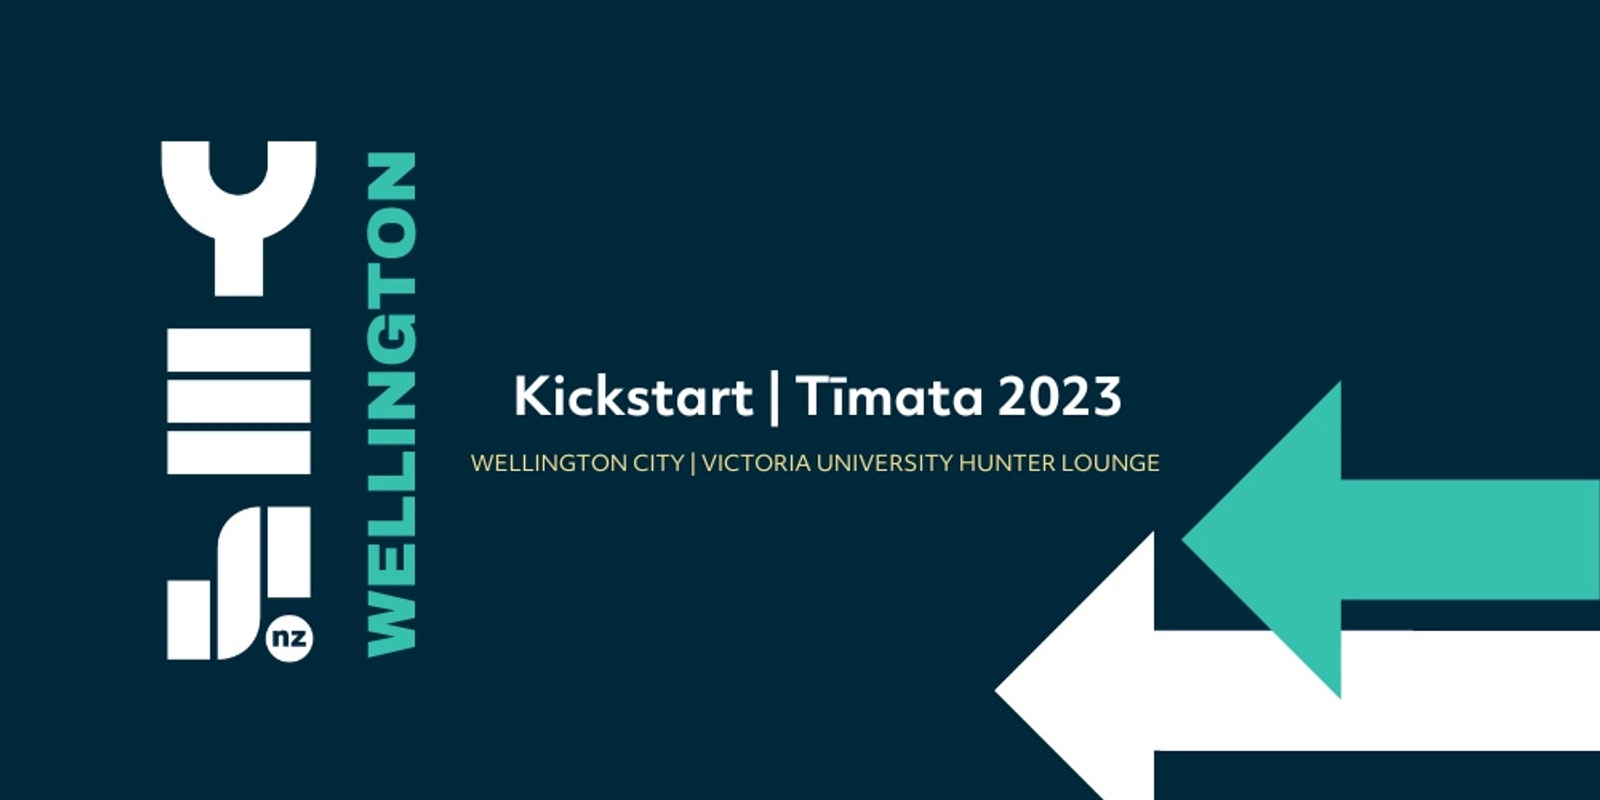 Banner image for YES Wellington Kickstart | Tīmata Wellington City